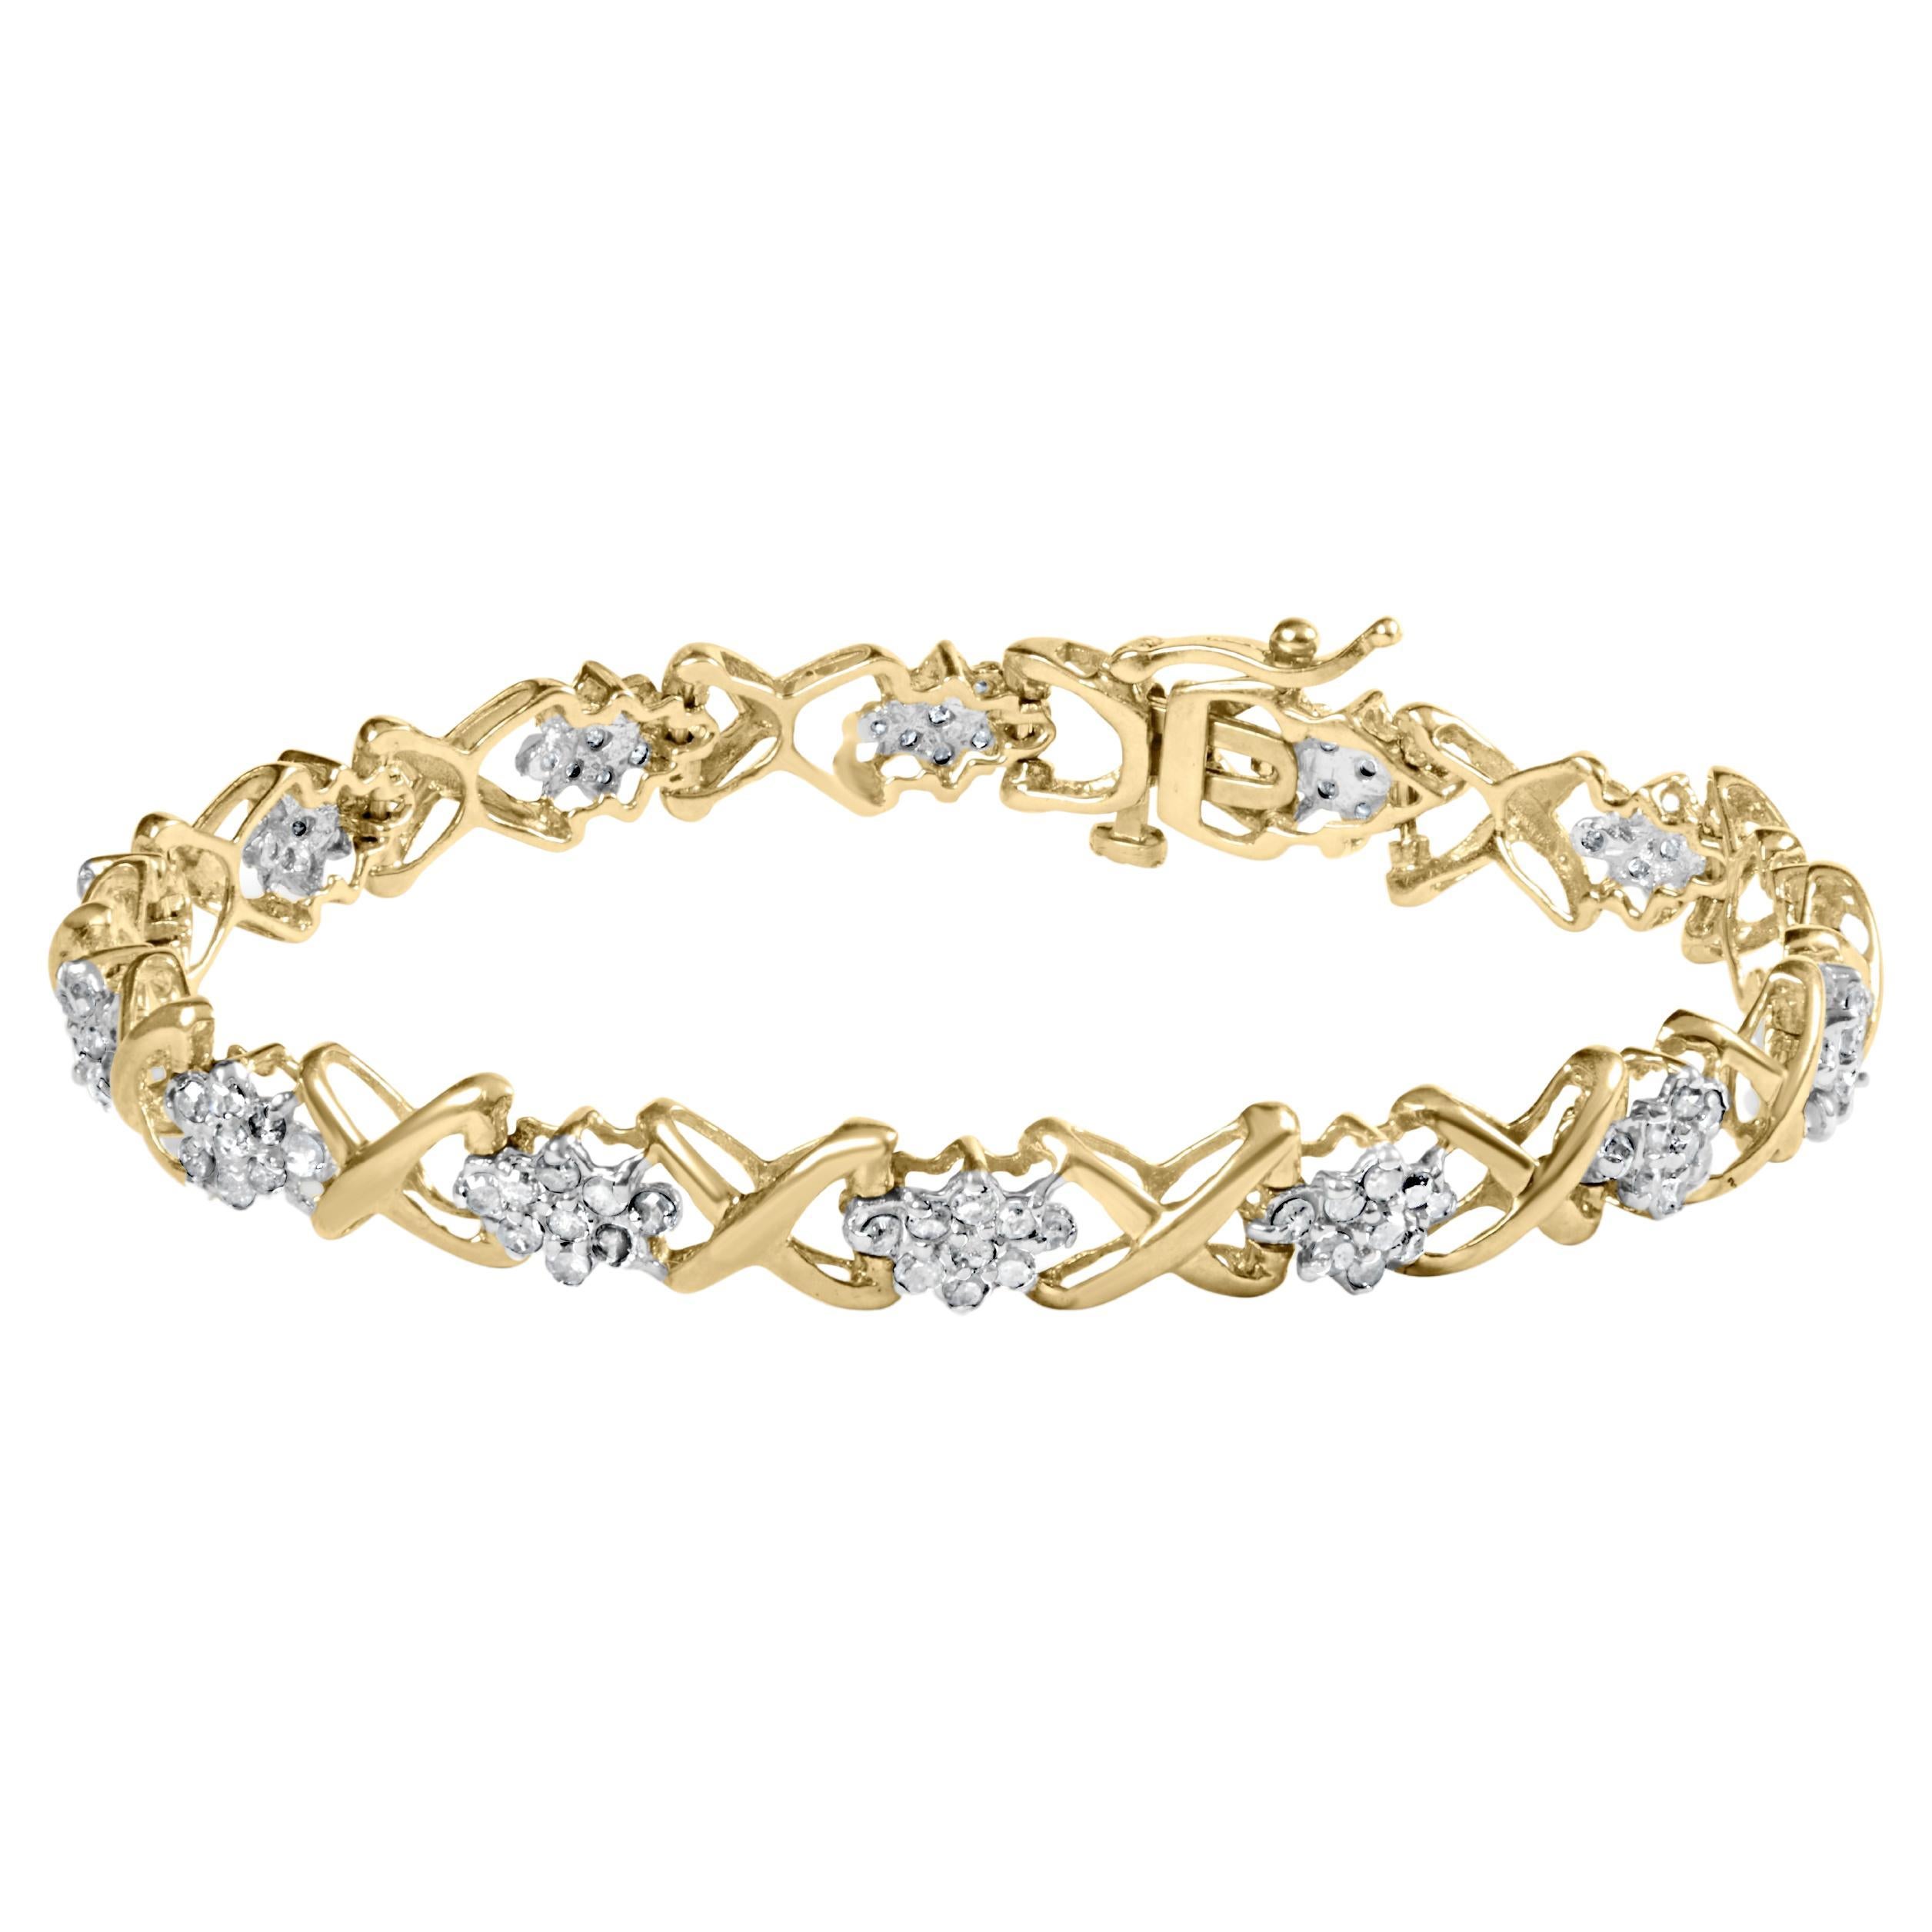 10K Yellow Gold 2.0 Carat Diamond Cluster and Alternating "X" Link Bracelet